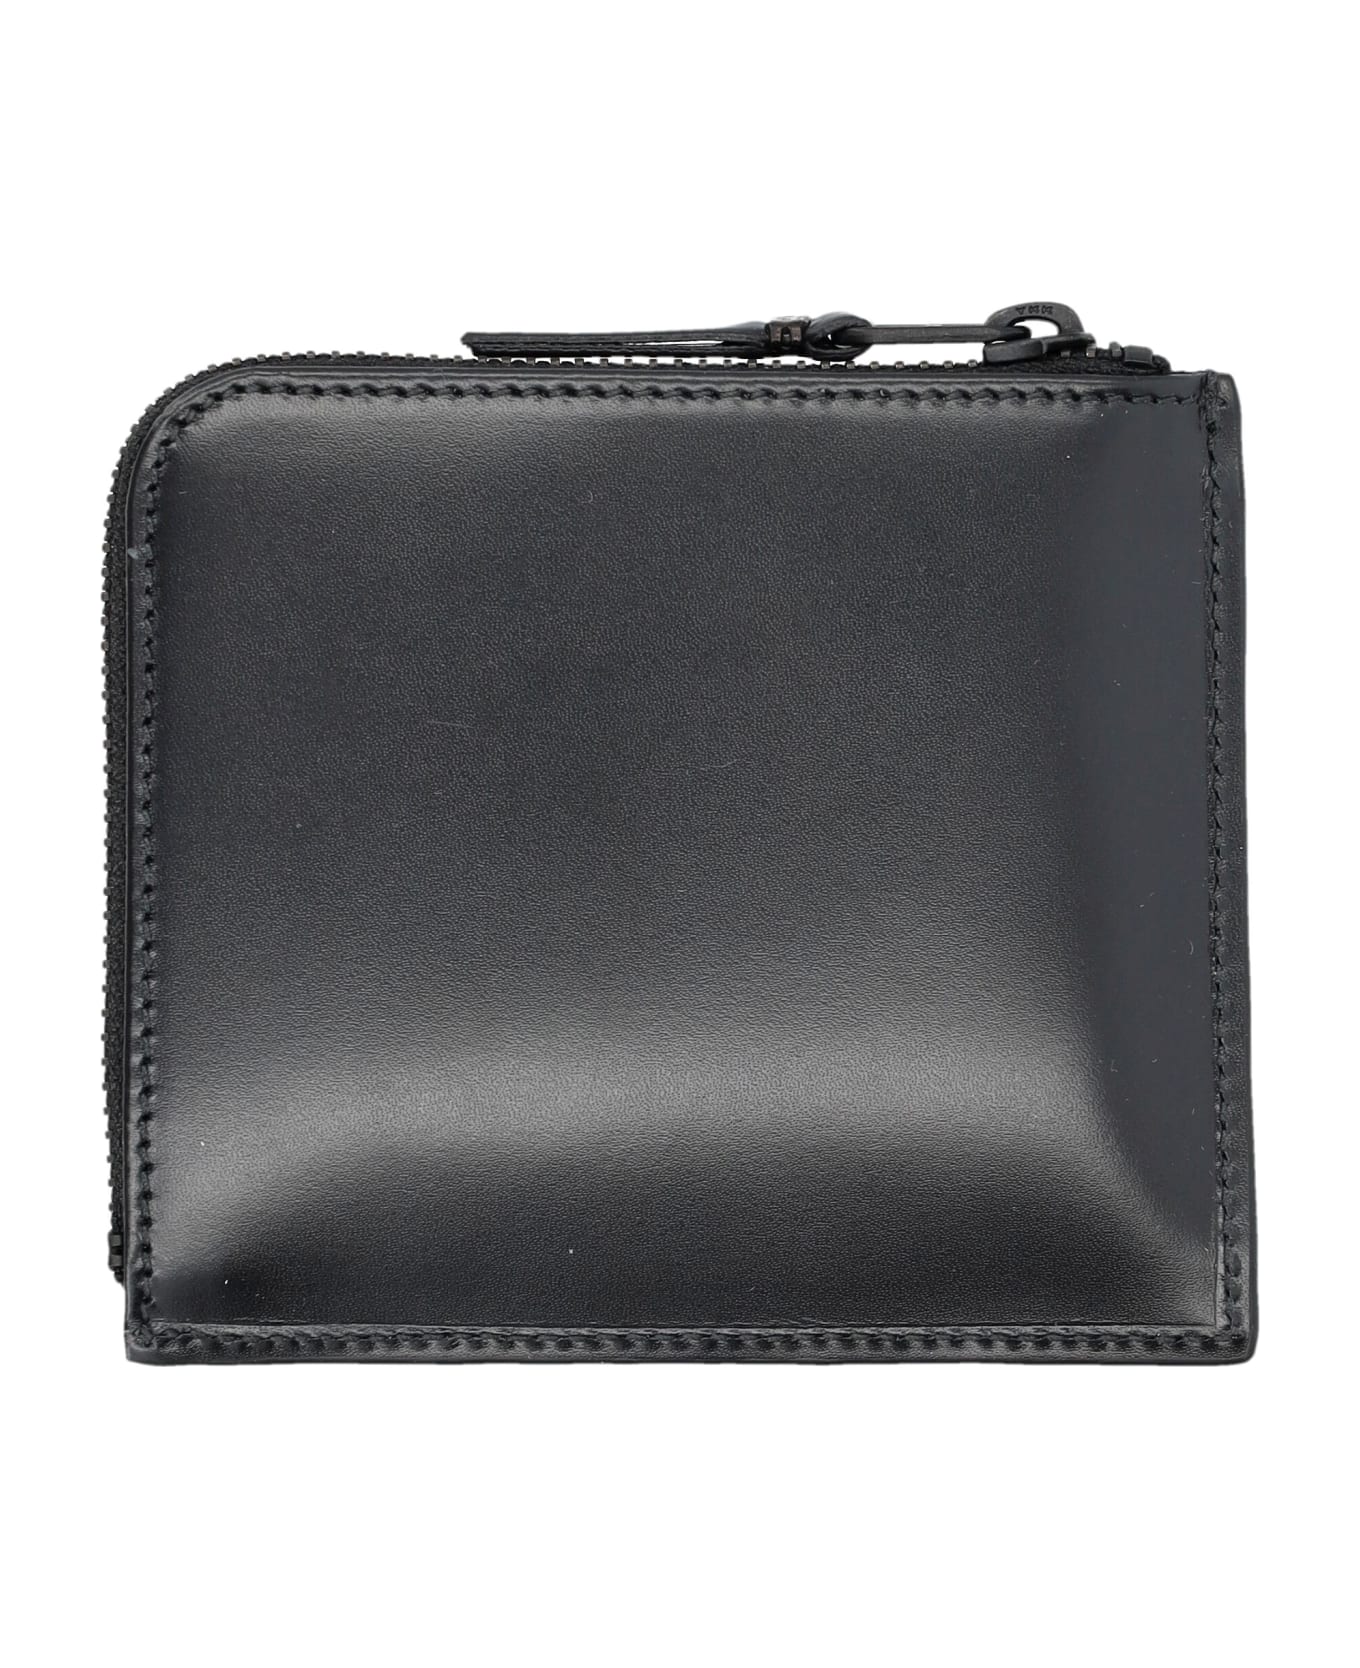 Comme des Garçons Wallet Very Black Zip Wallet - BLACK